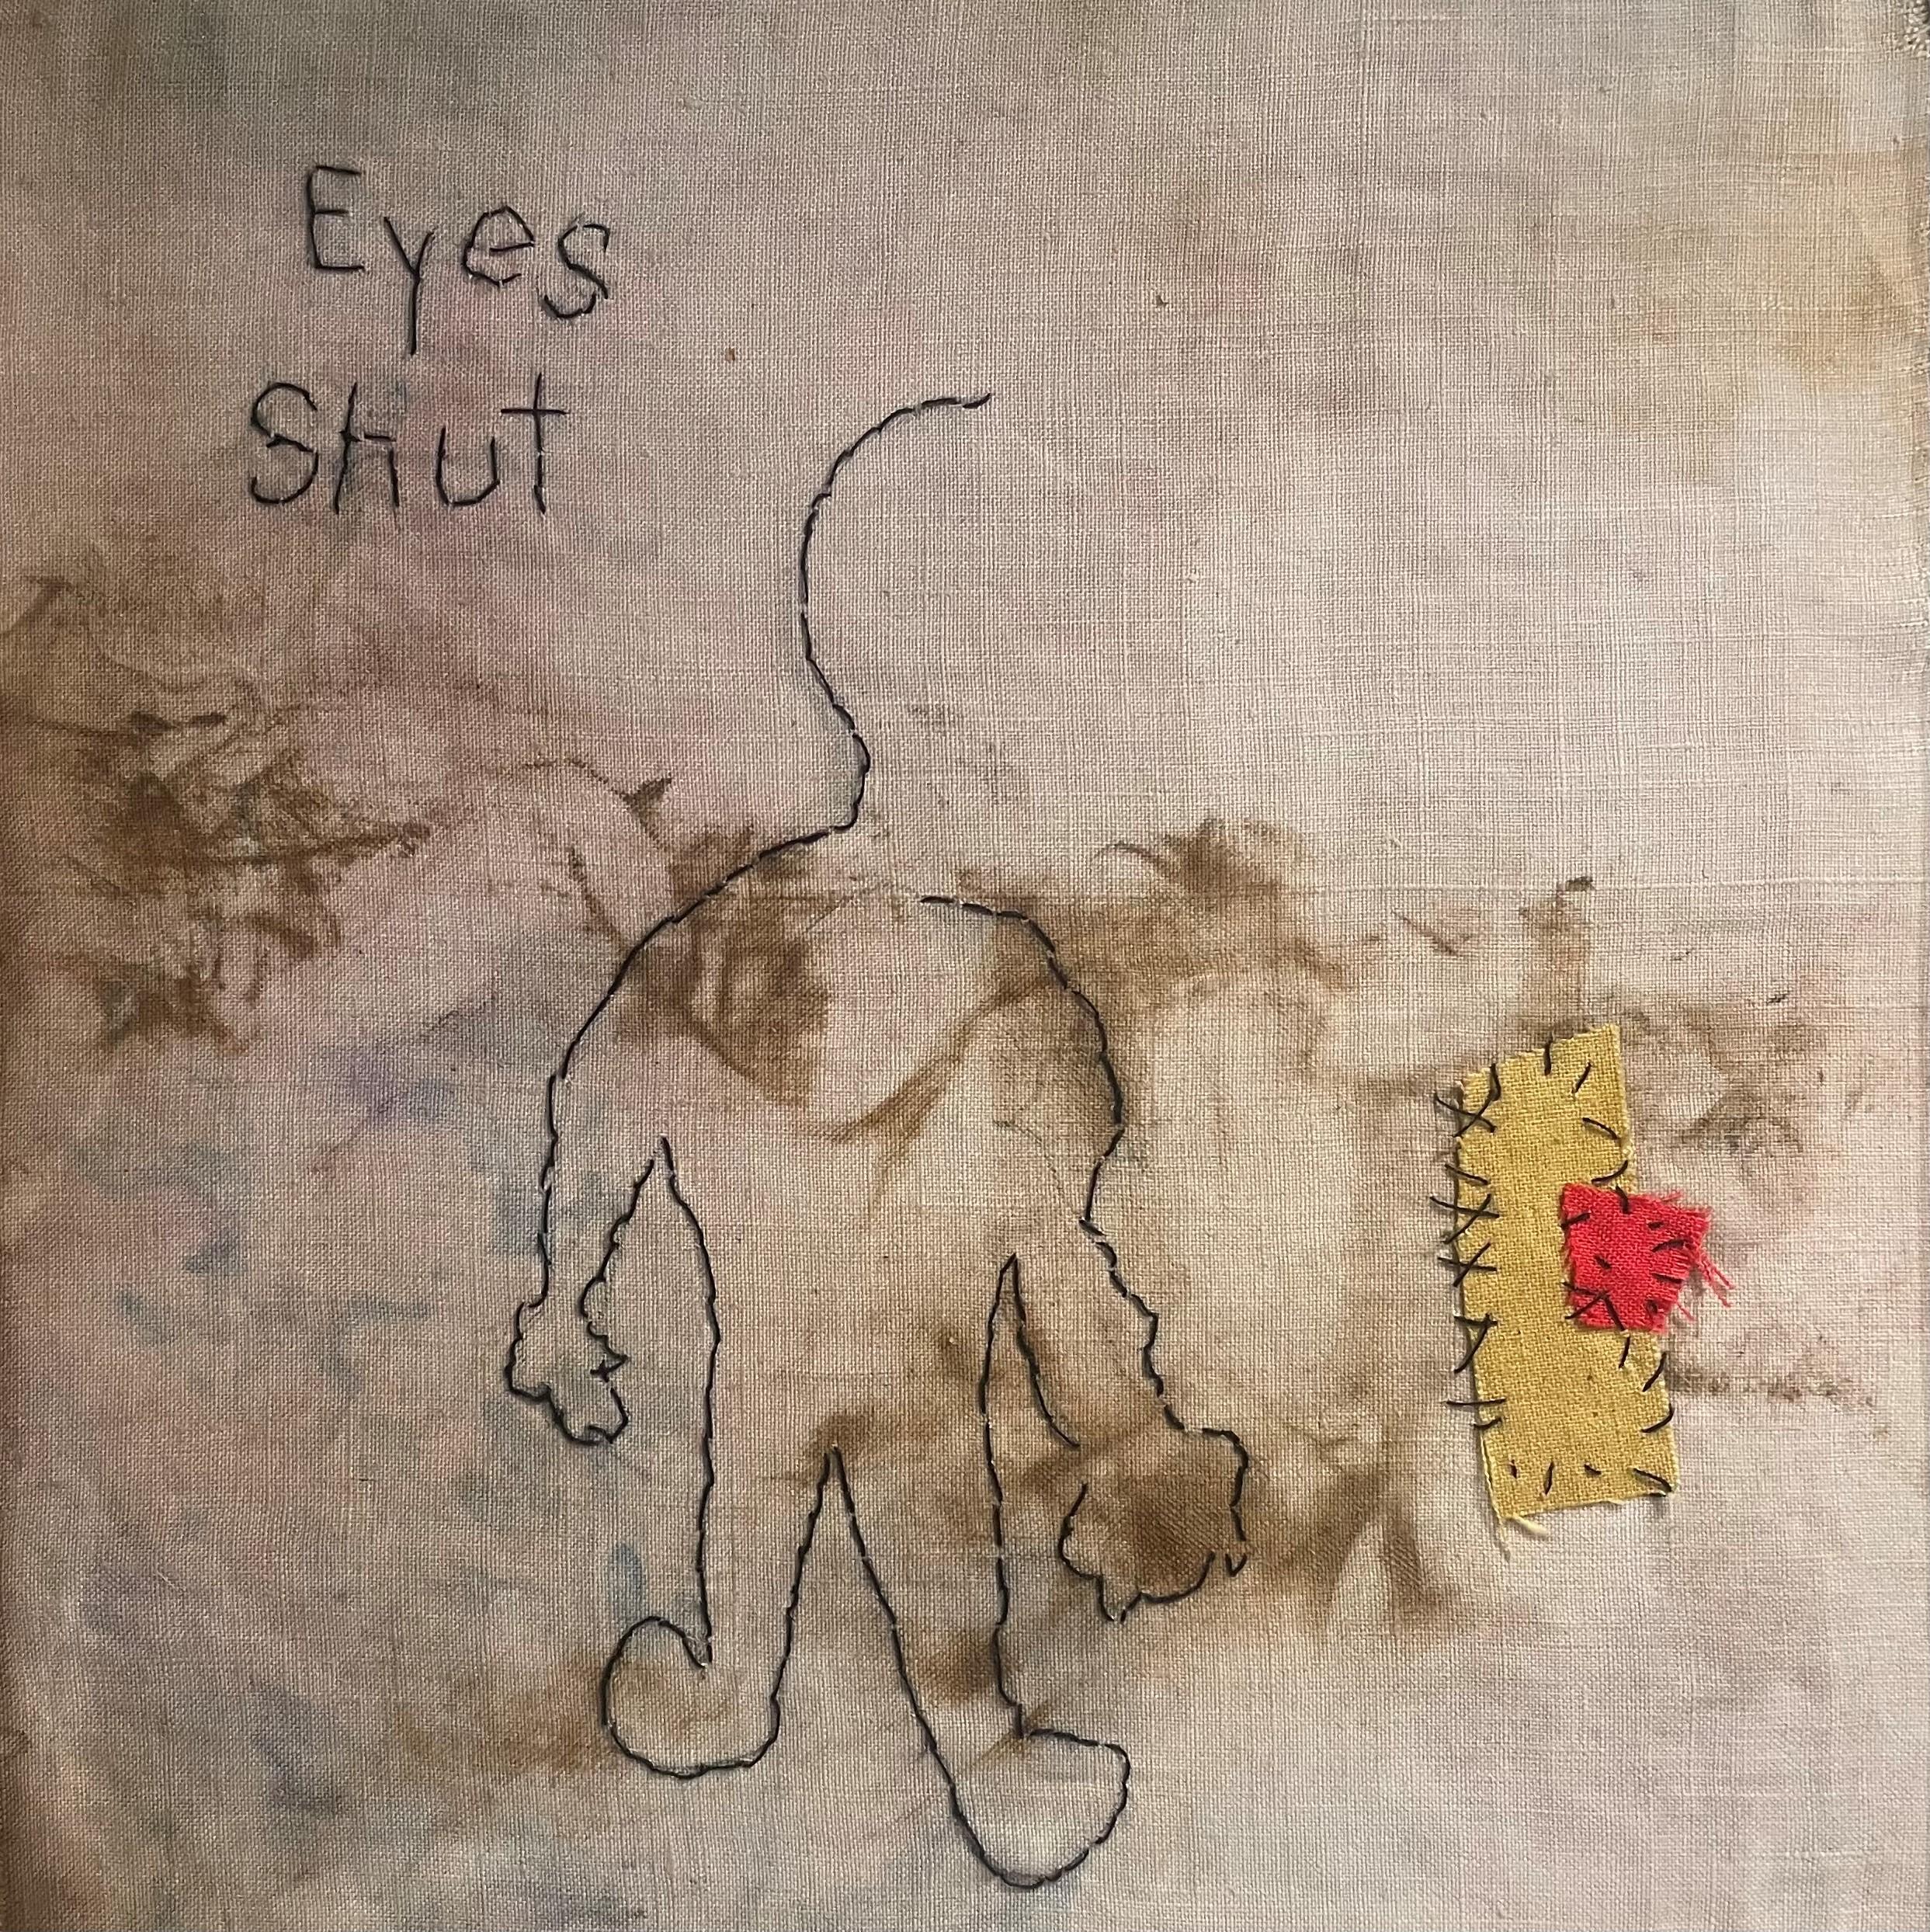 Eyes Shut - Mixed Media Art by Suzy Farren